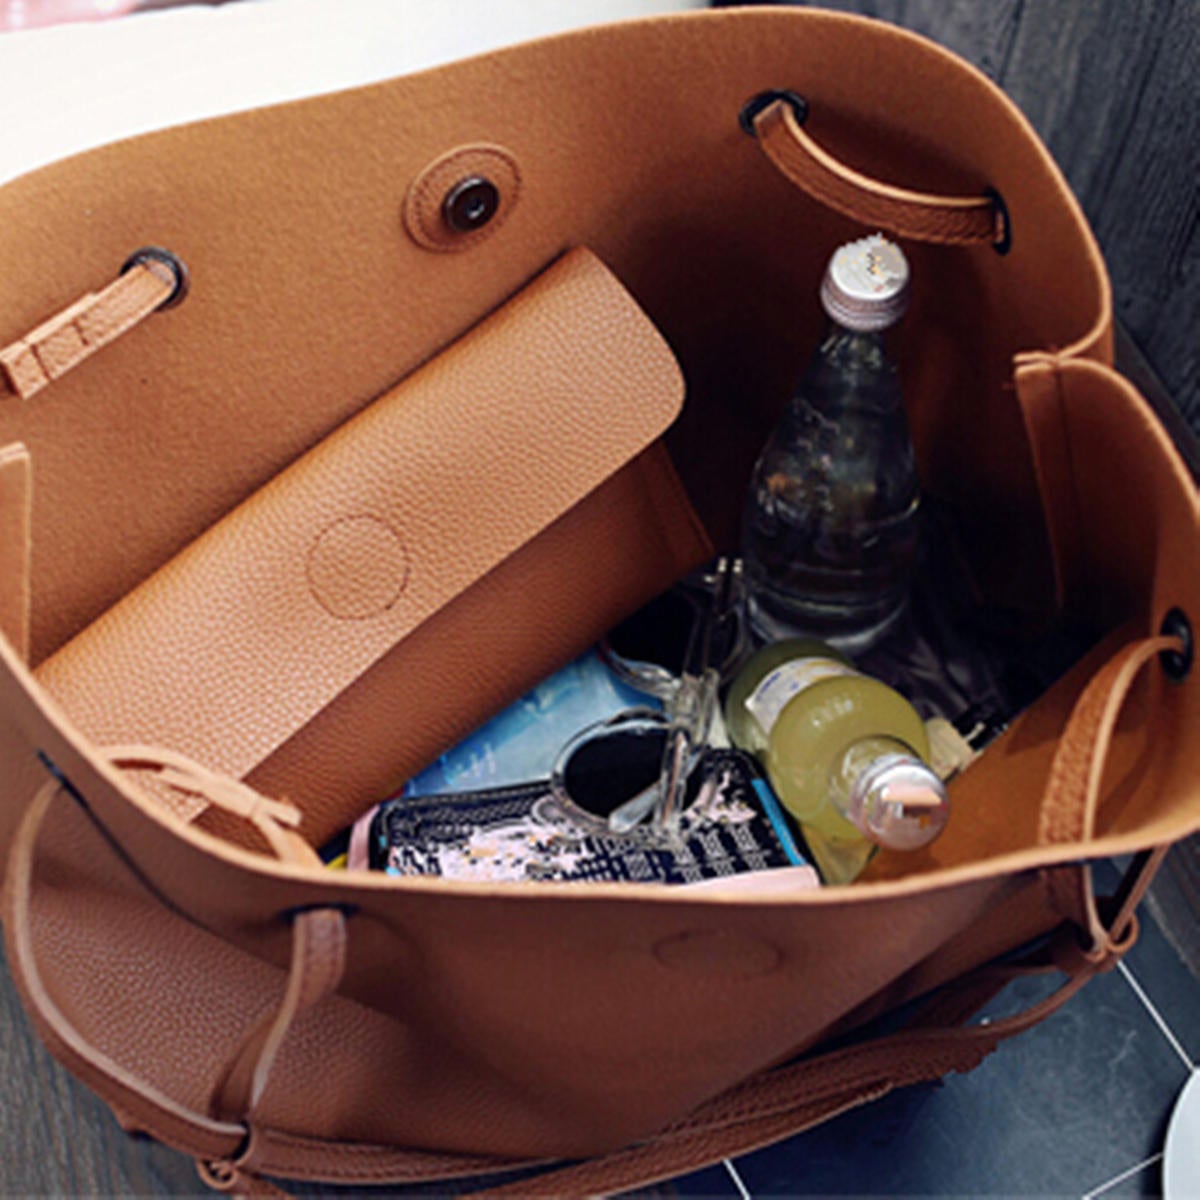 2pcs Women Leather Large Shoulder Messenger Shopping Bag Purse Handbag Tote